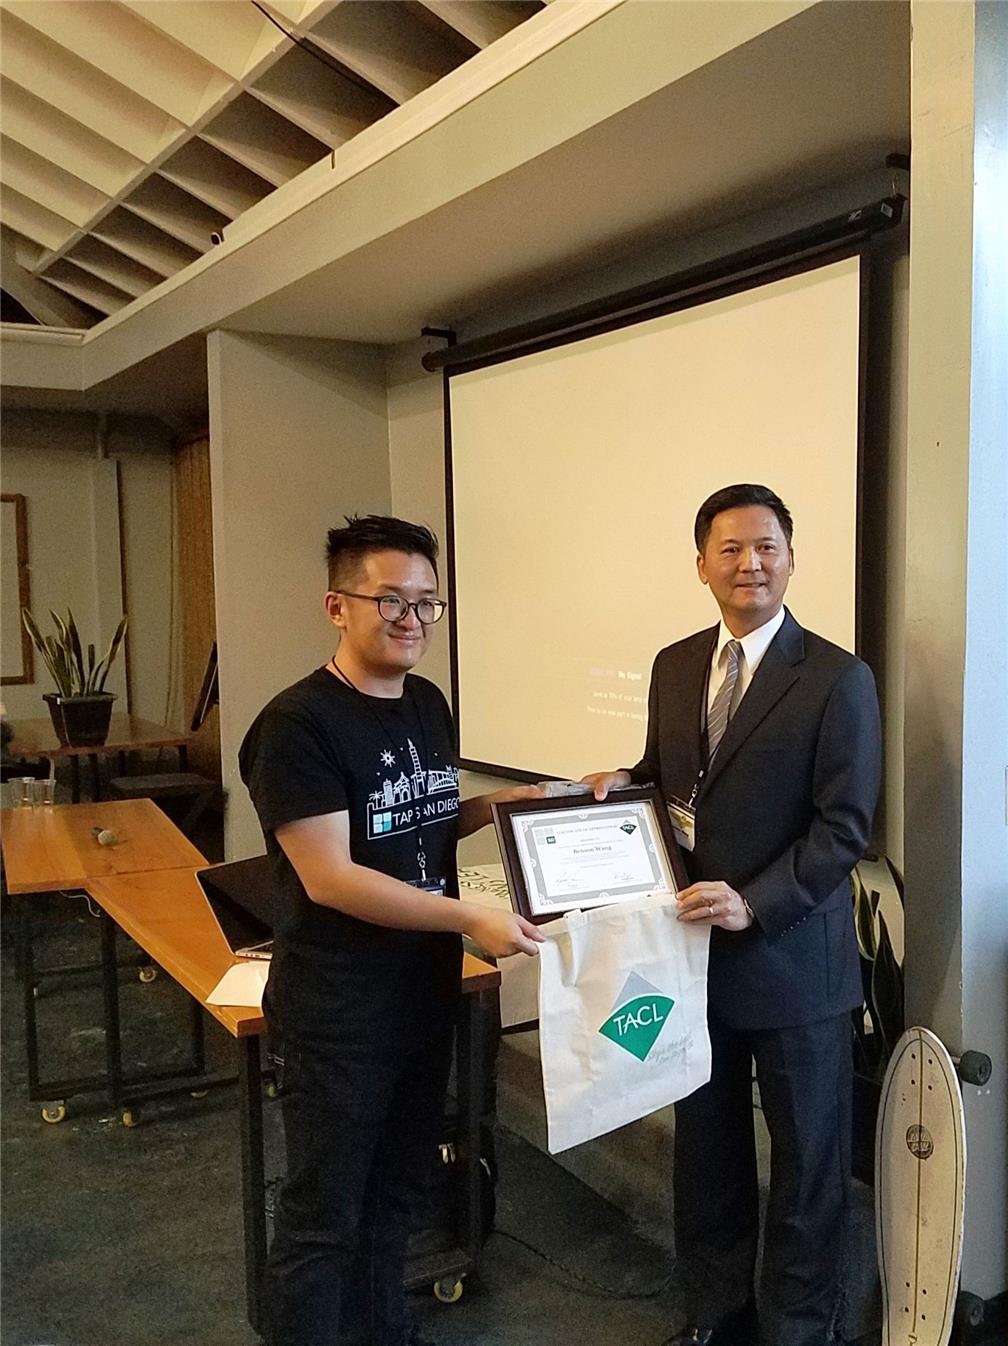 The Chairman Liu of TAP-SD presented Gratitude Awards to the Deputy Director General of TECO-LA, Benson Wang